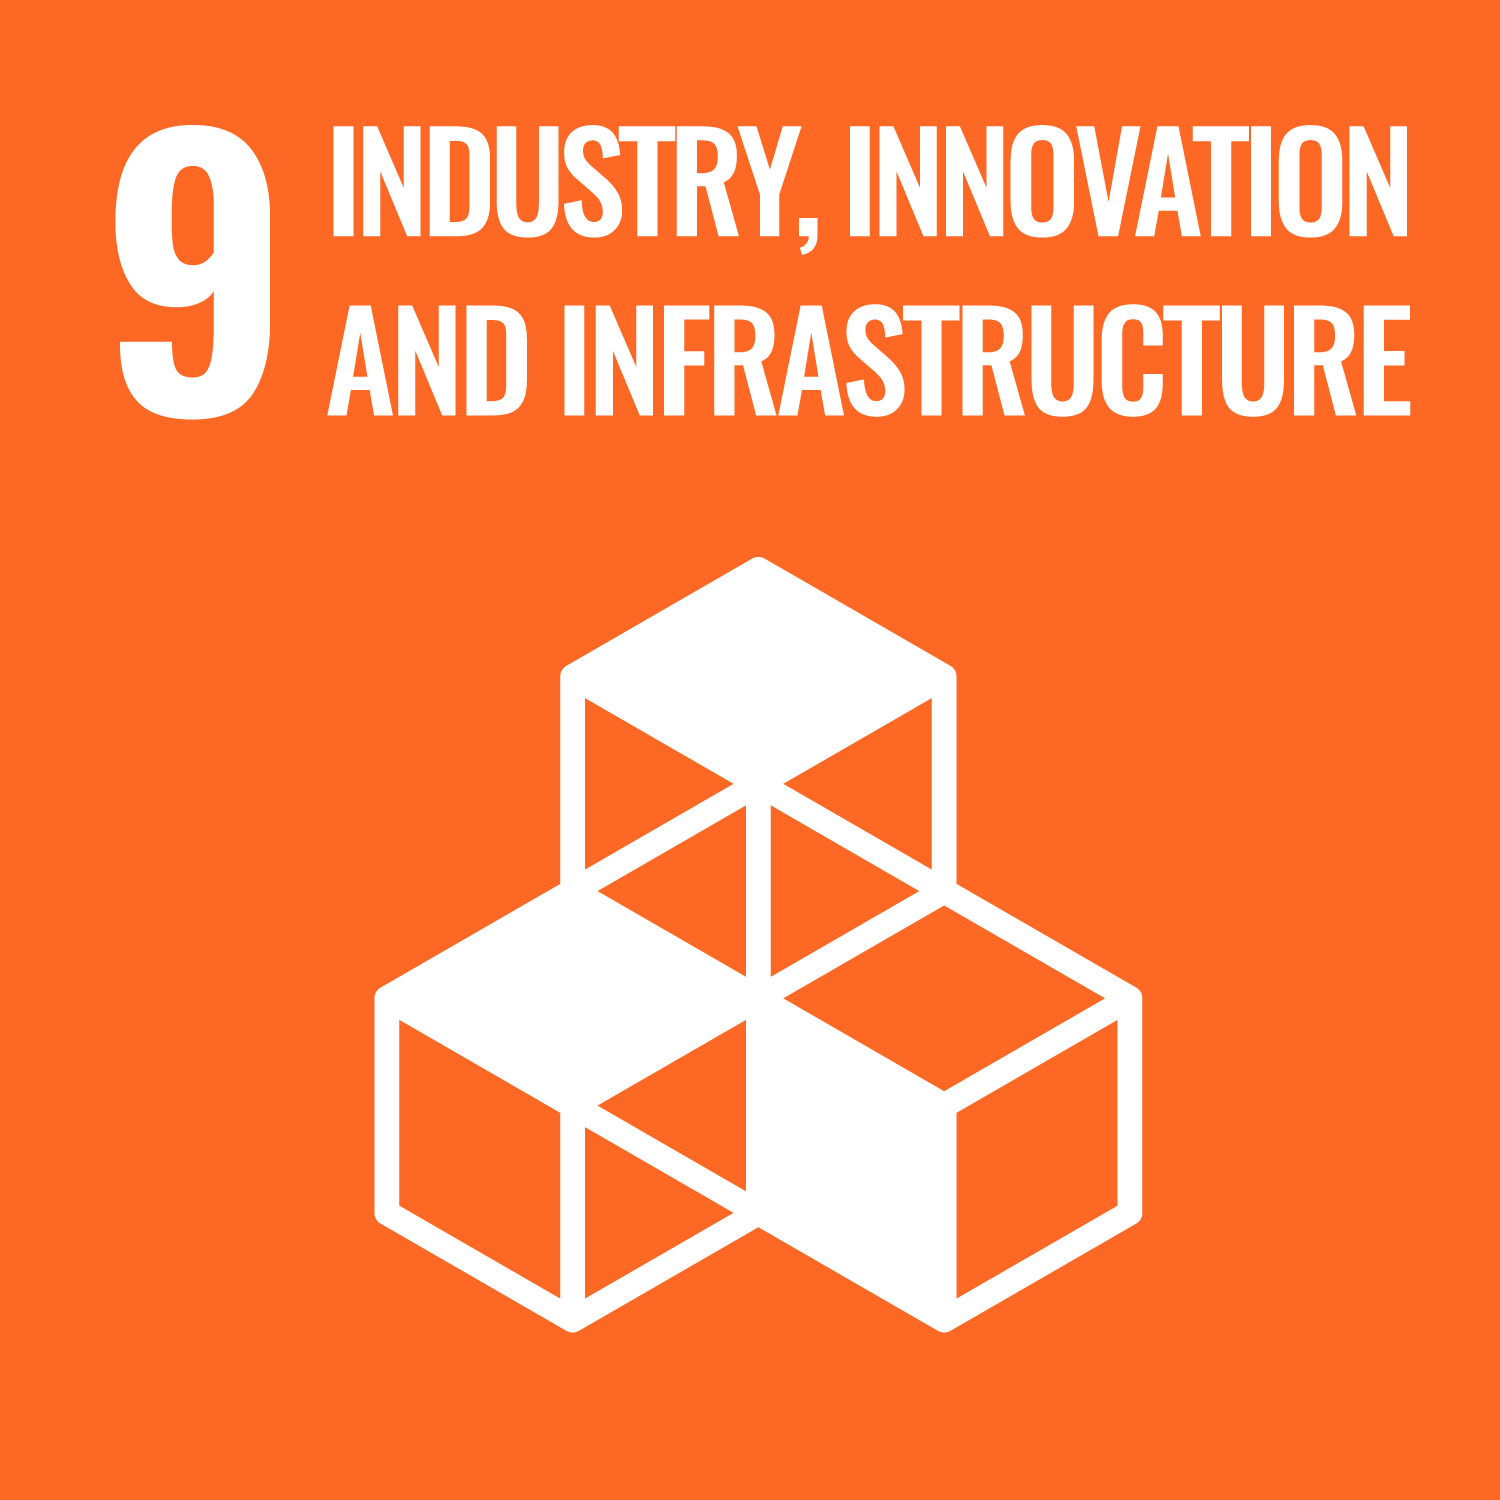 sustainable-development-goals-industry-innovation-and-industry-innovation-and-infrastructure